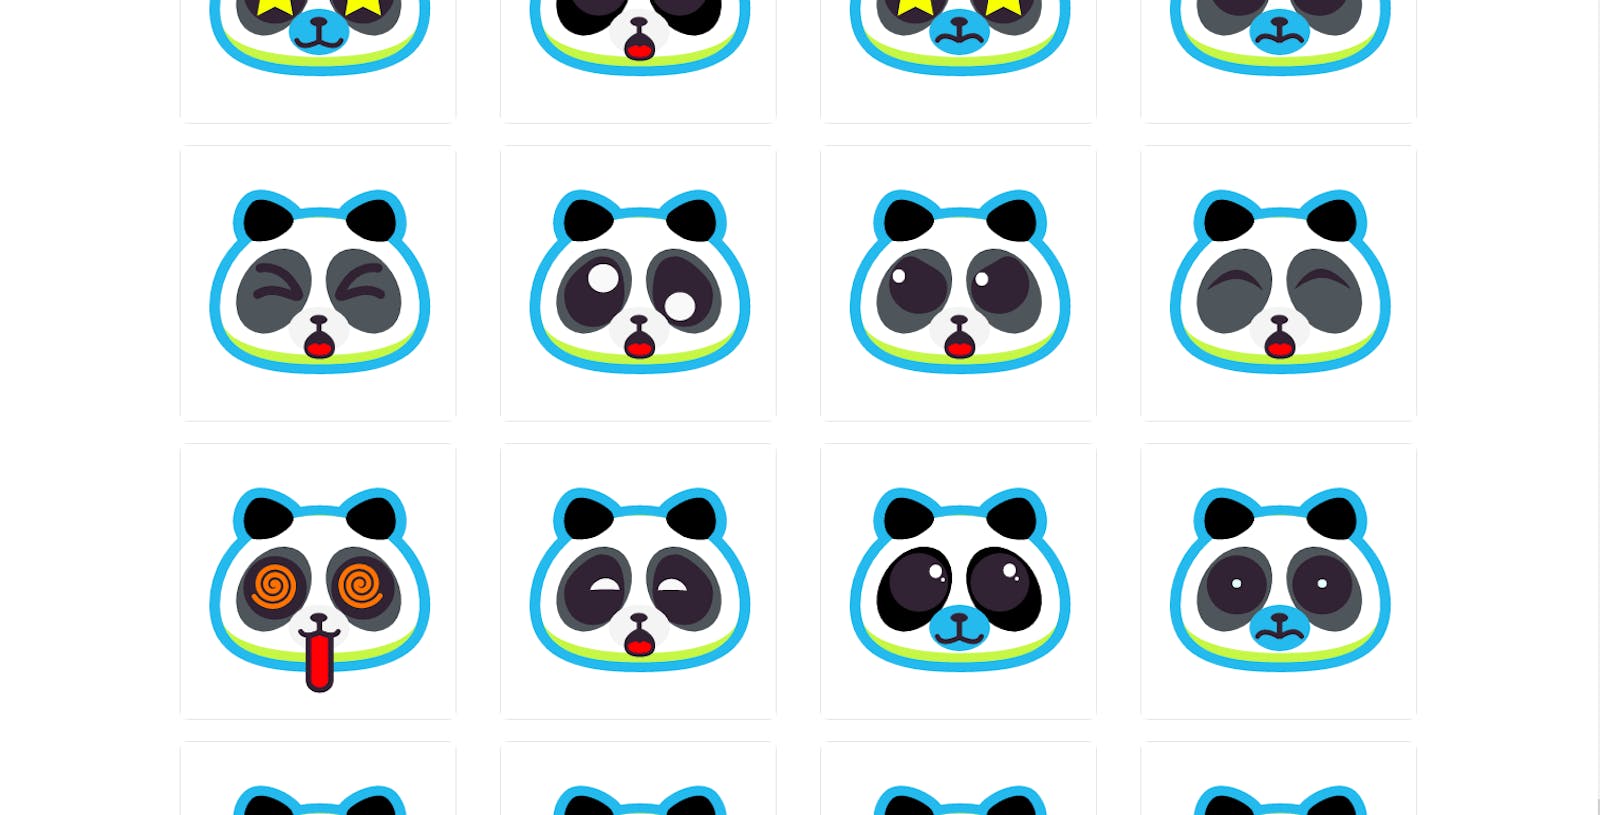 Introducing Avatarsum: Cute Pandas for your app